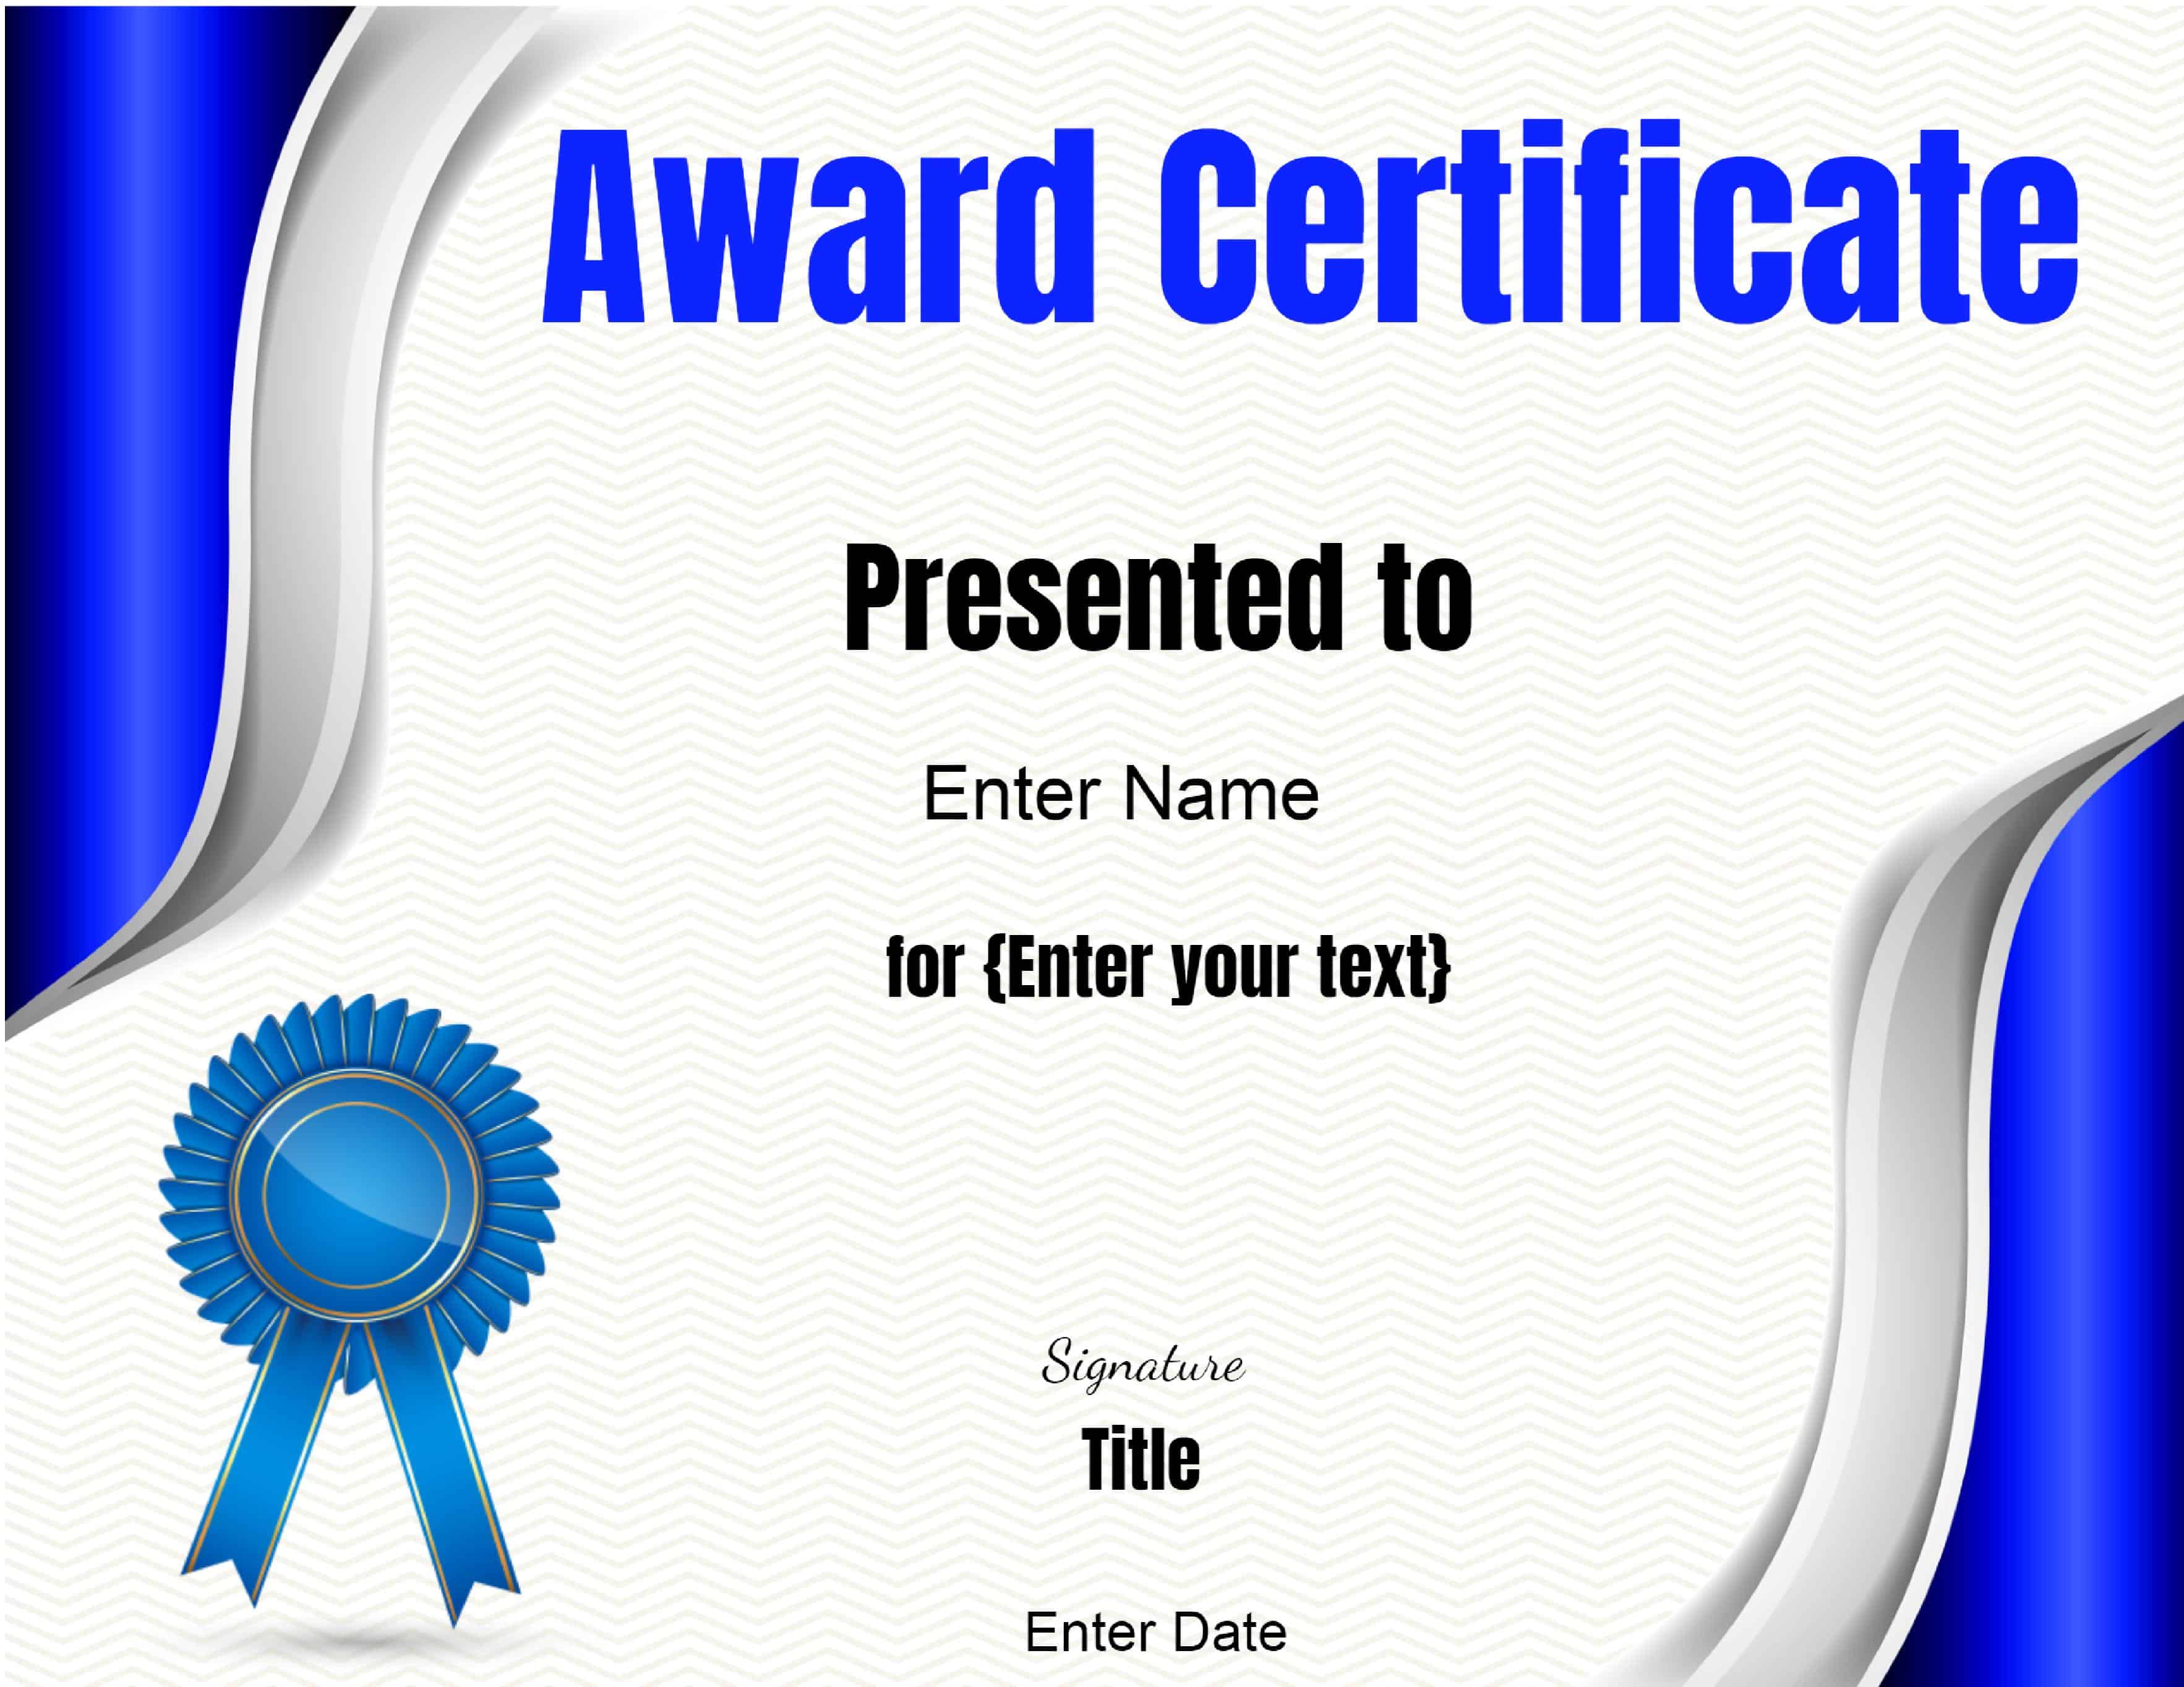 free-printable-award-certificate-templates